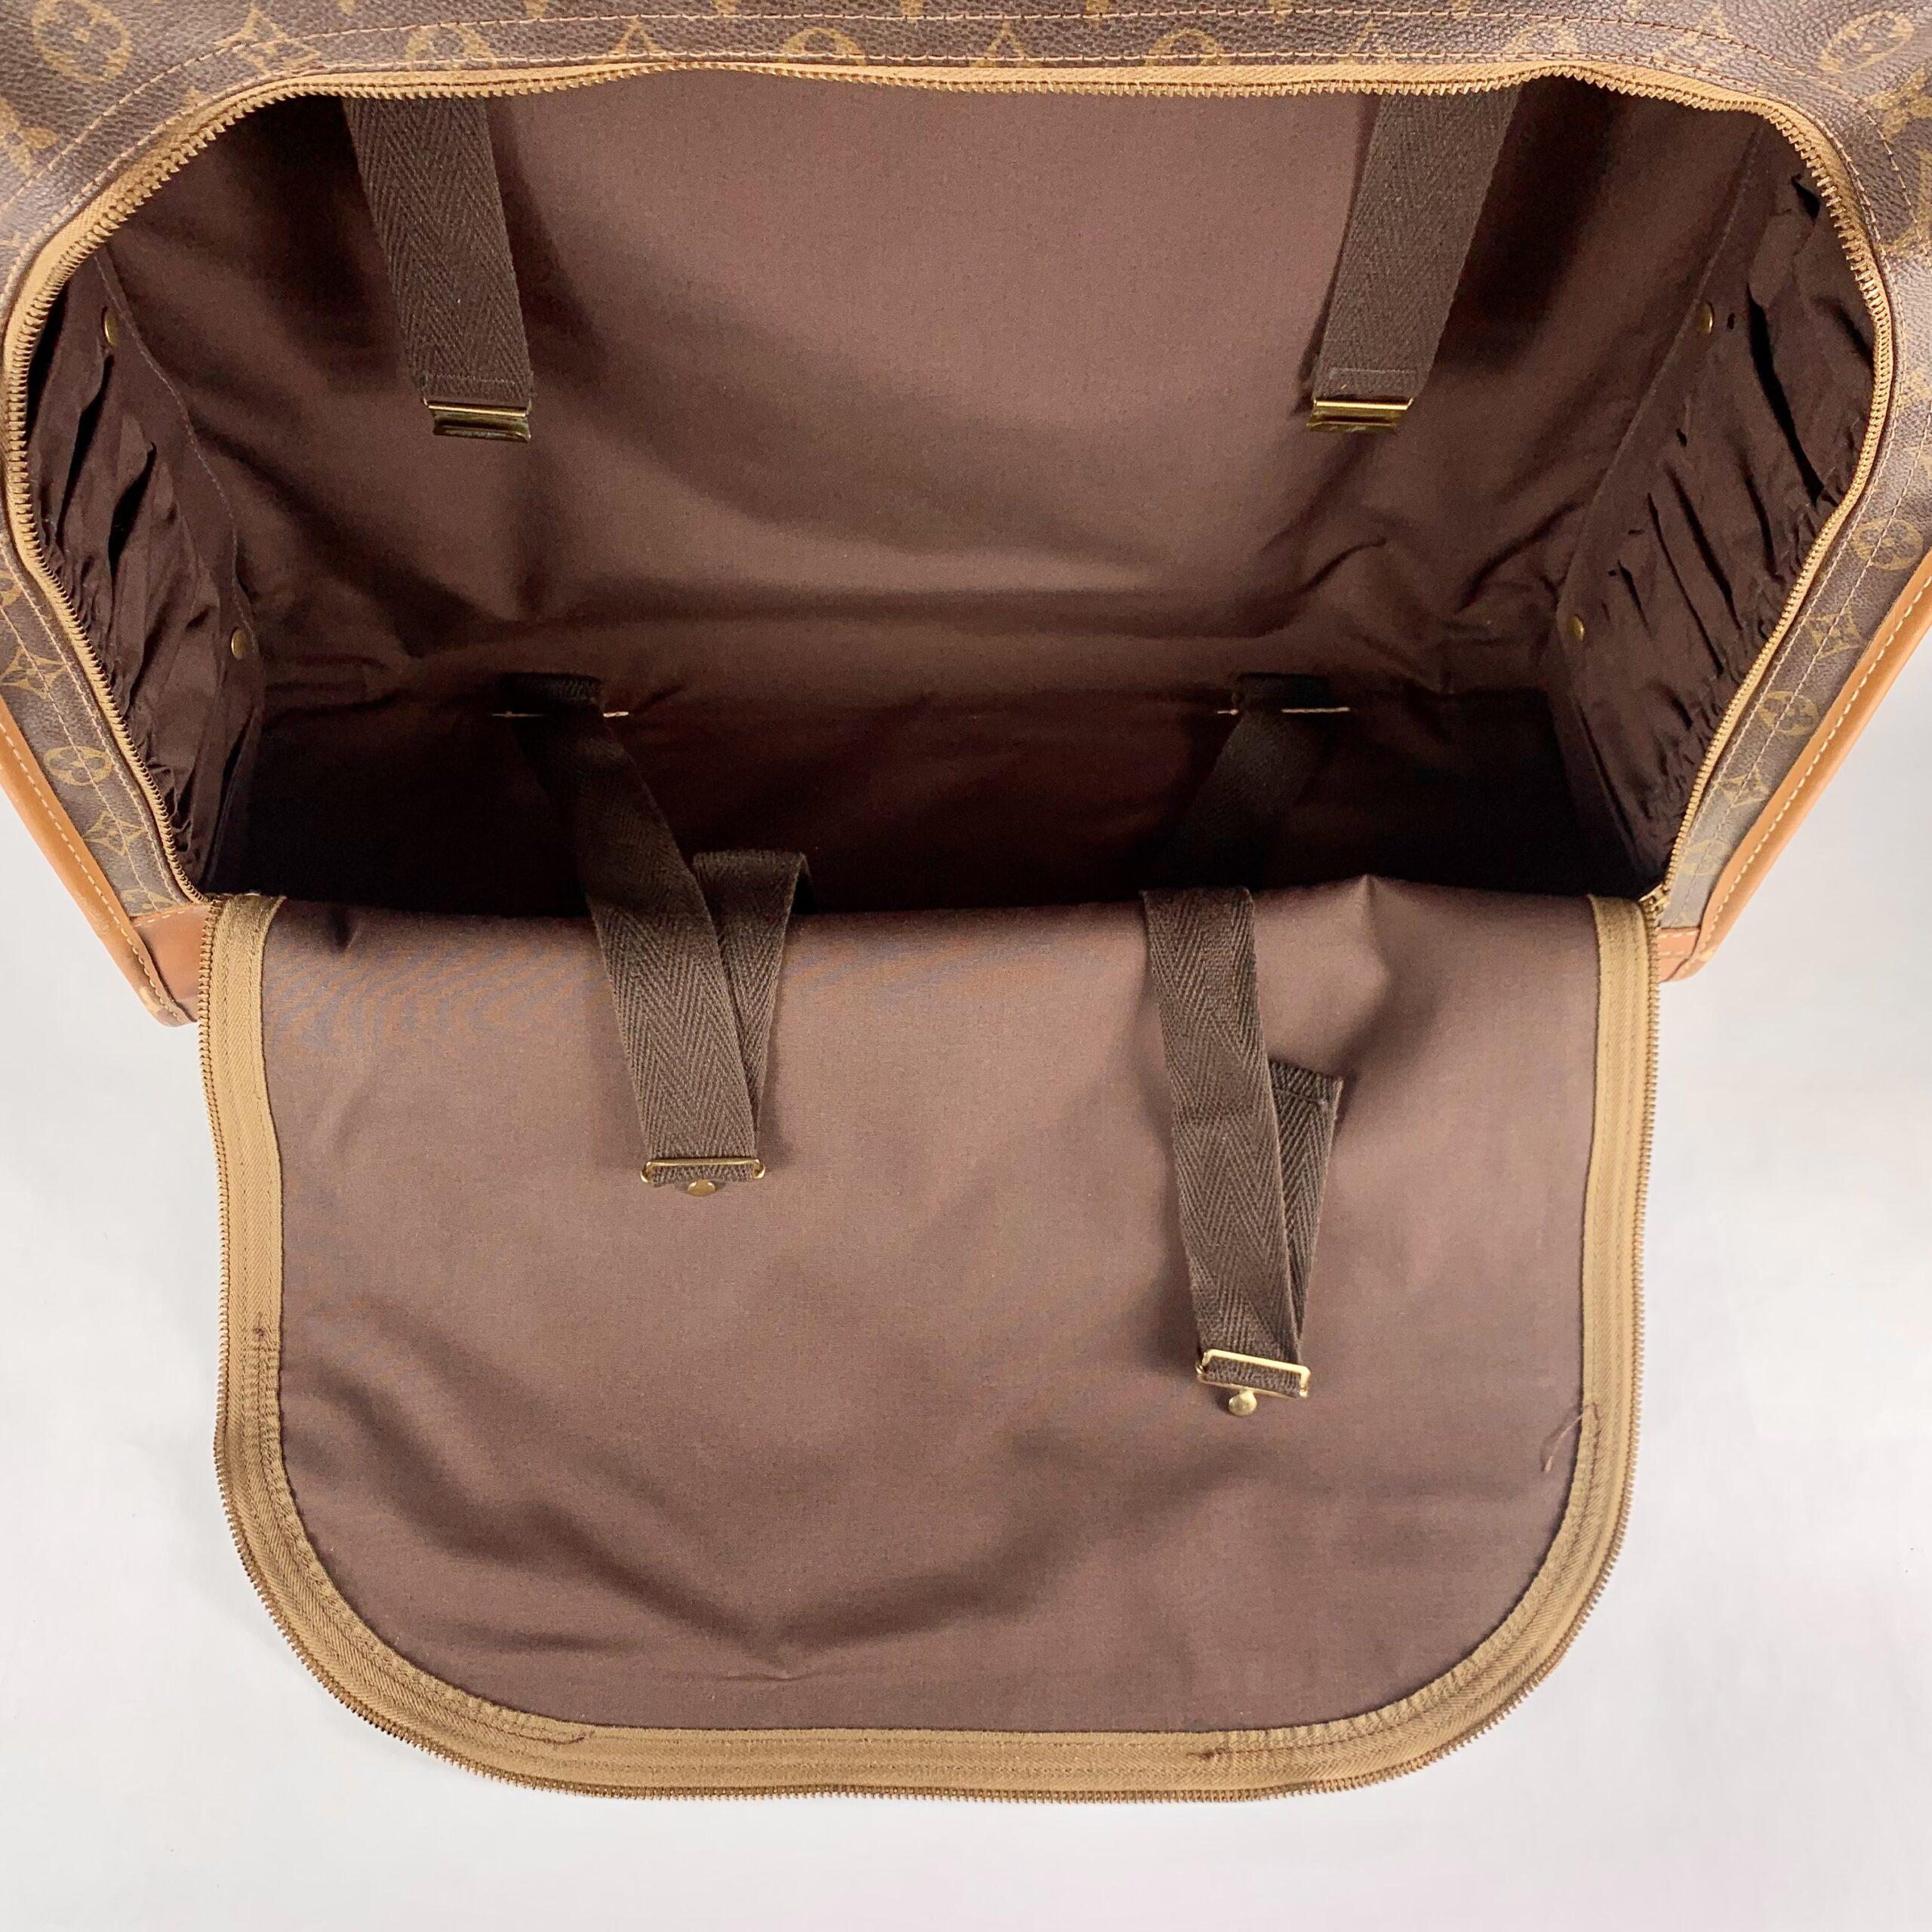 Vintage Louis Vuitton The French Company Pullman 60 Suitcase Entrupy  Verified